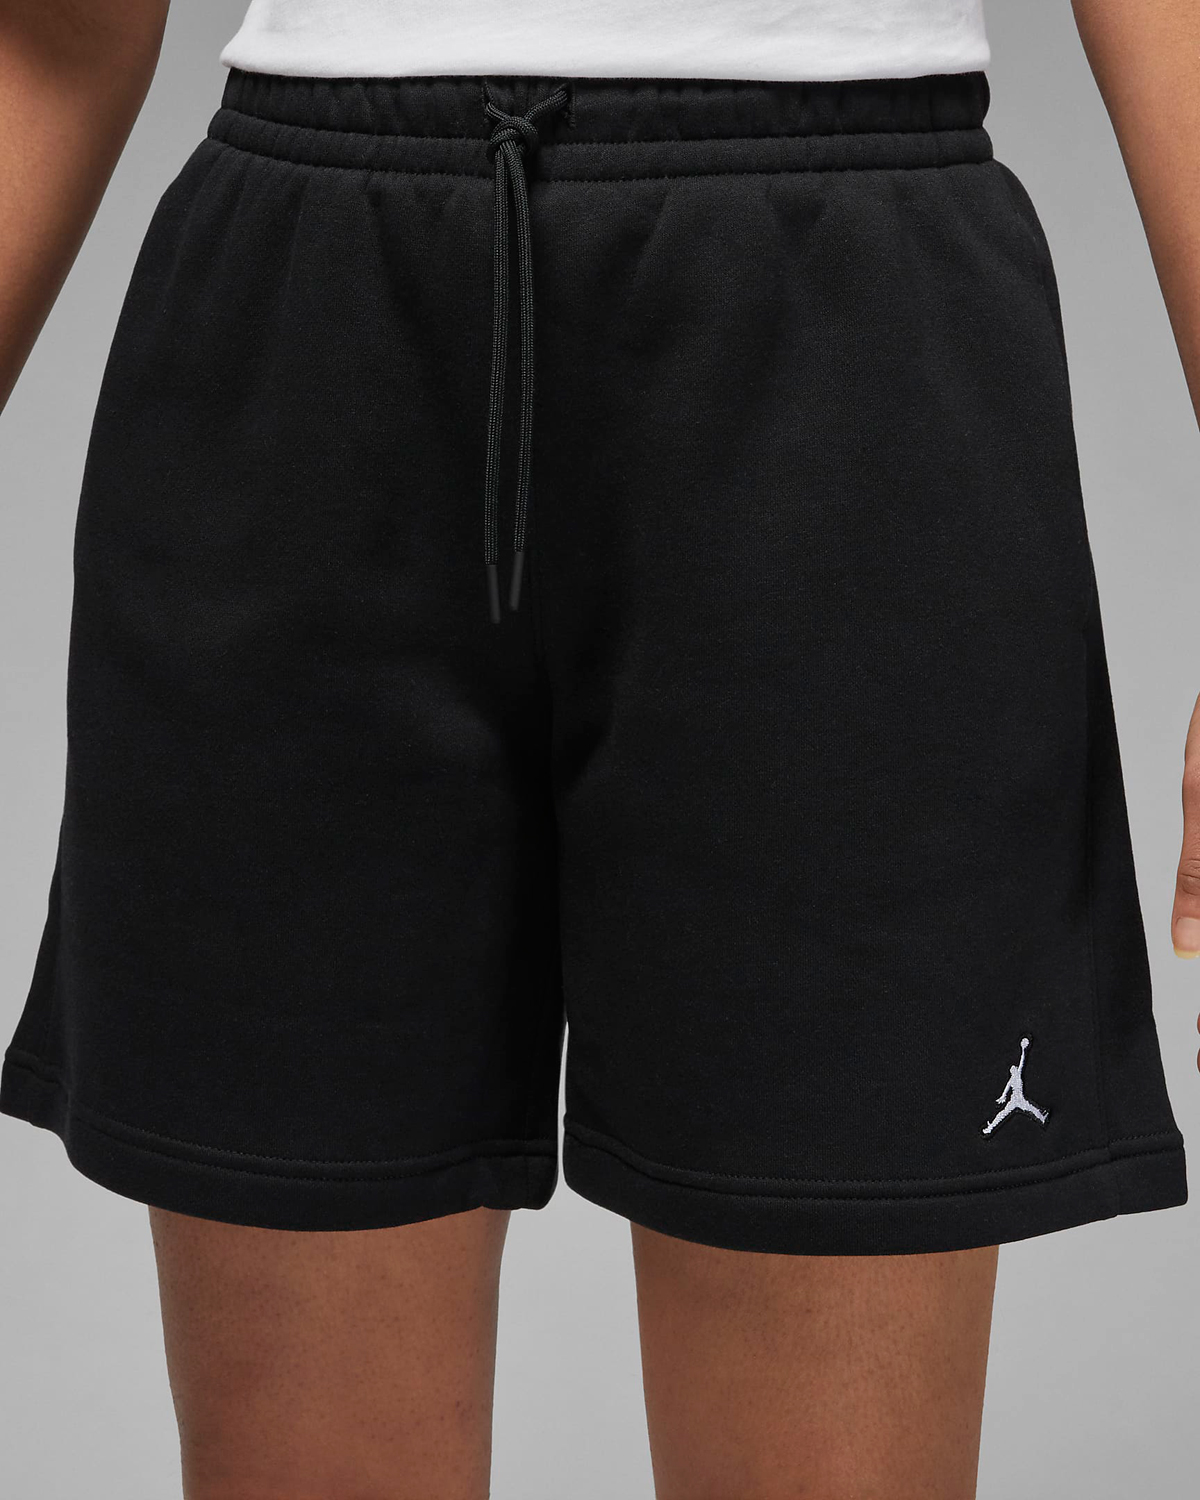 Jordan-Womens-Brooklyn-Fleece-Shorts-Black